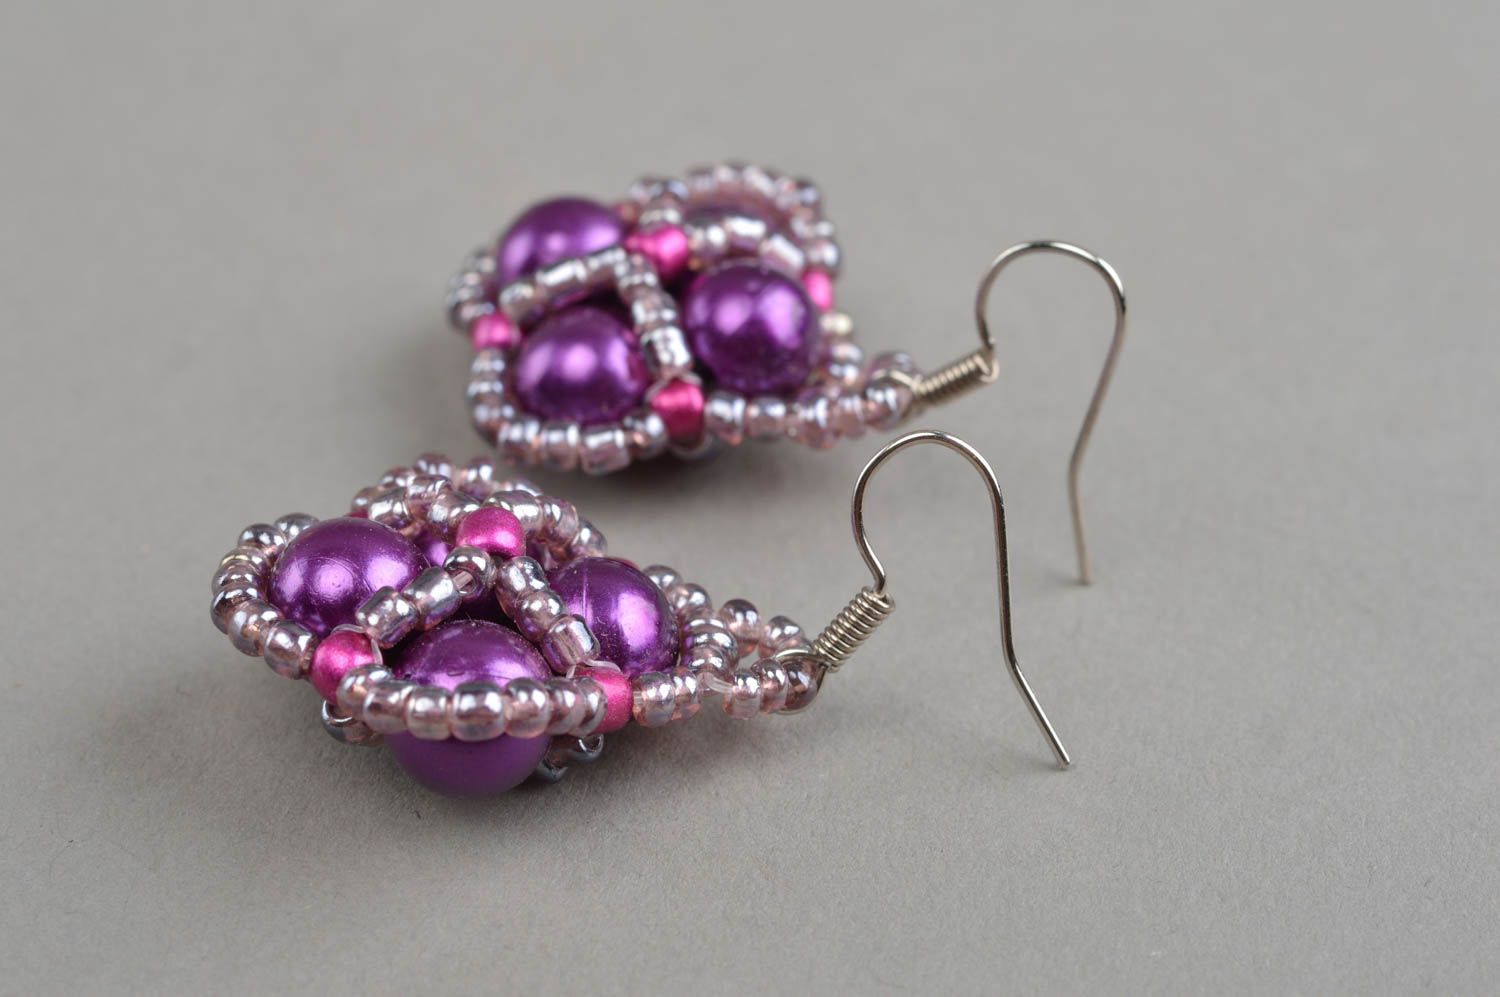 Cute handmade beaded earrings stylish jewelry for women fashion accessories photo 3